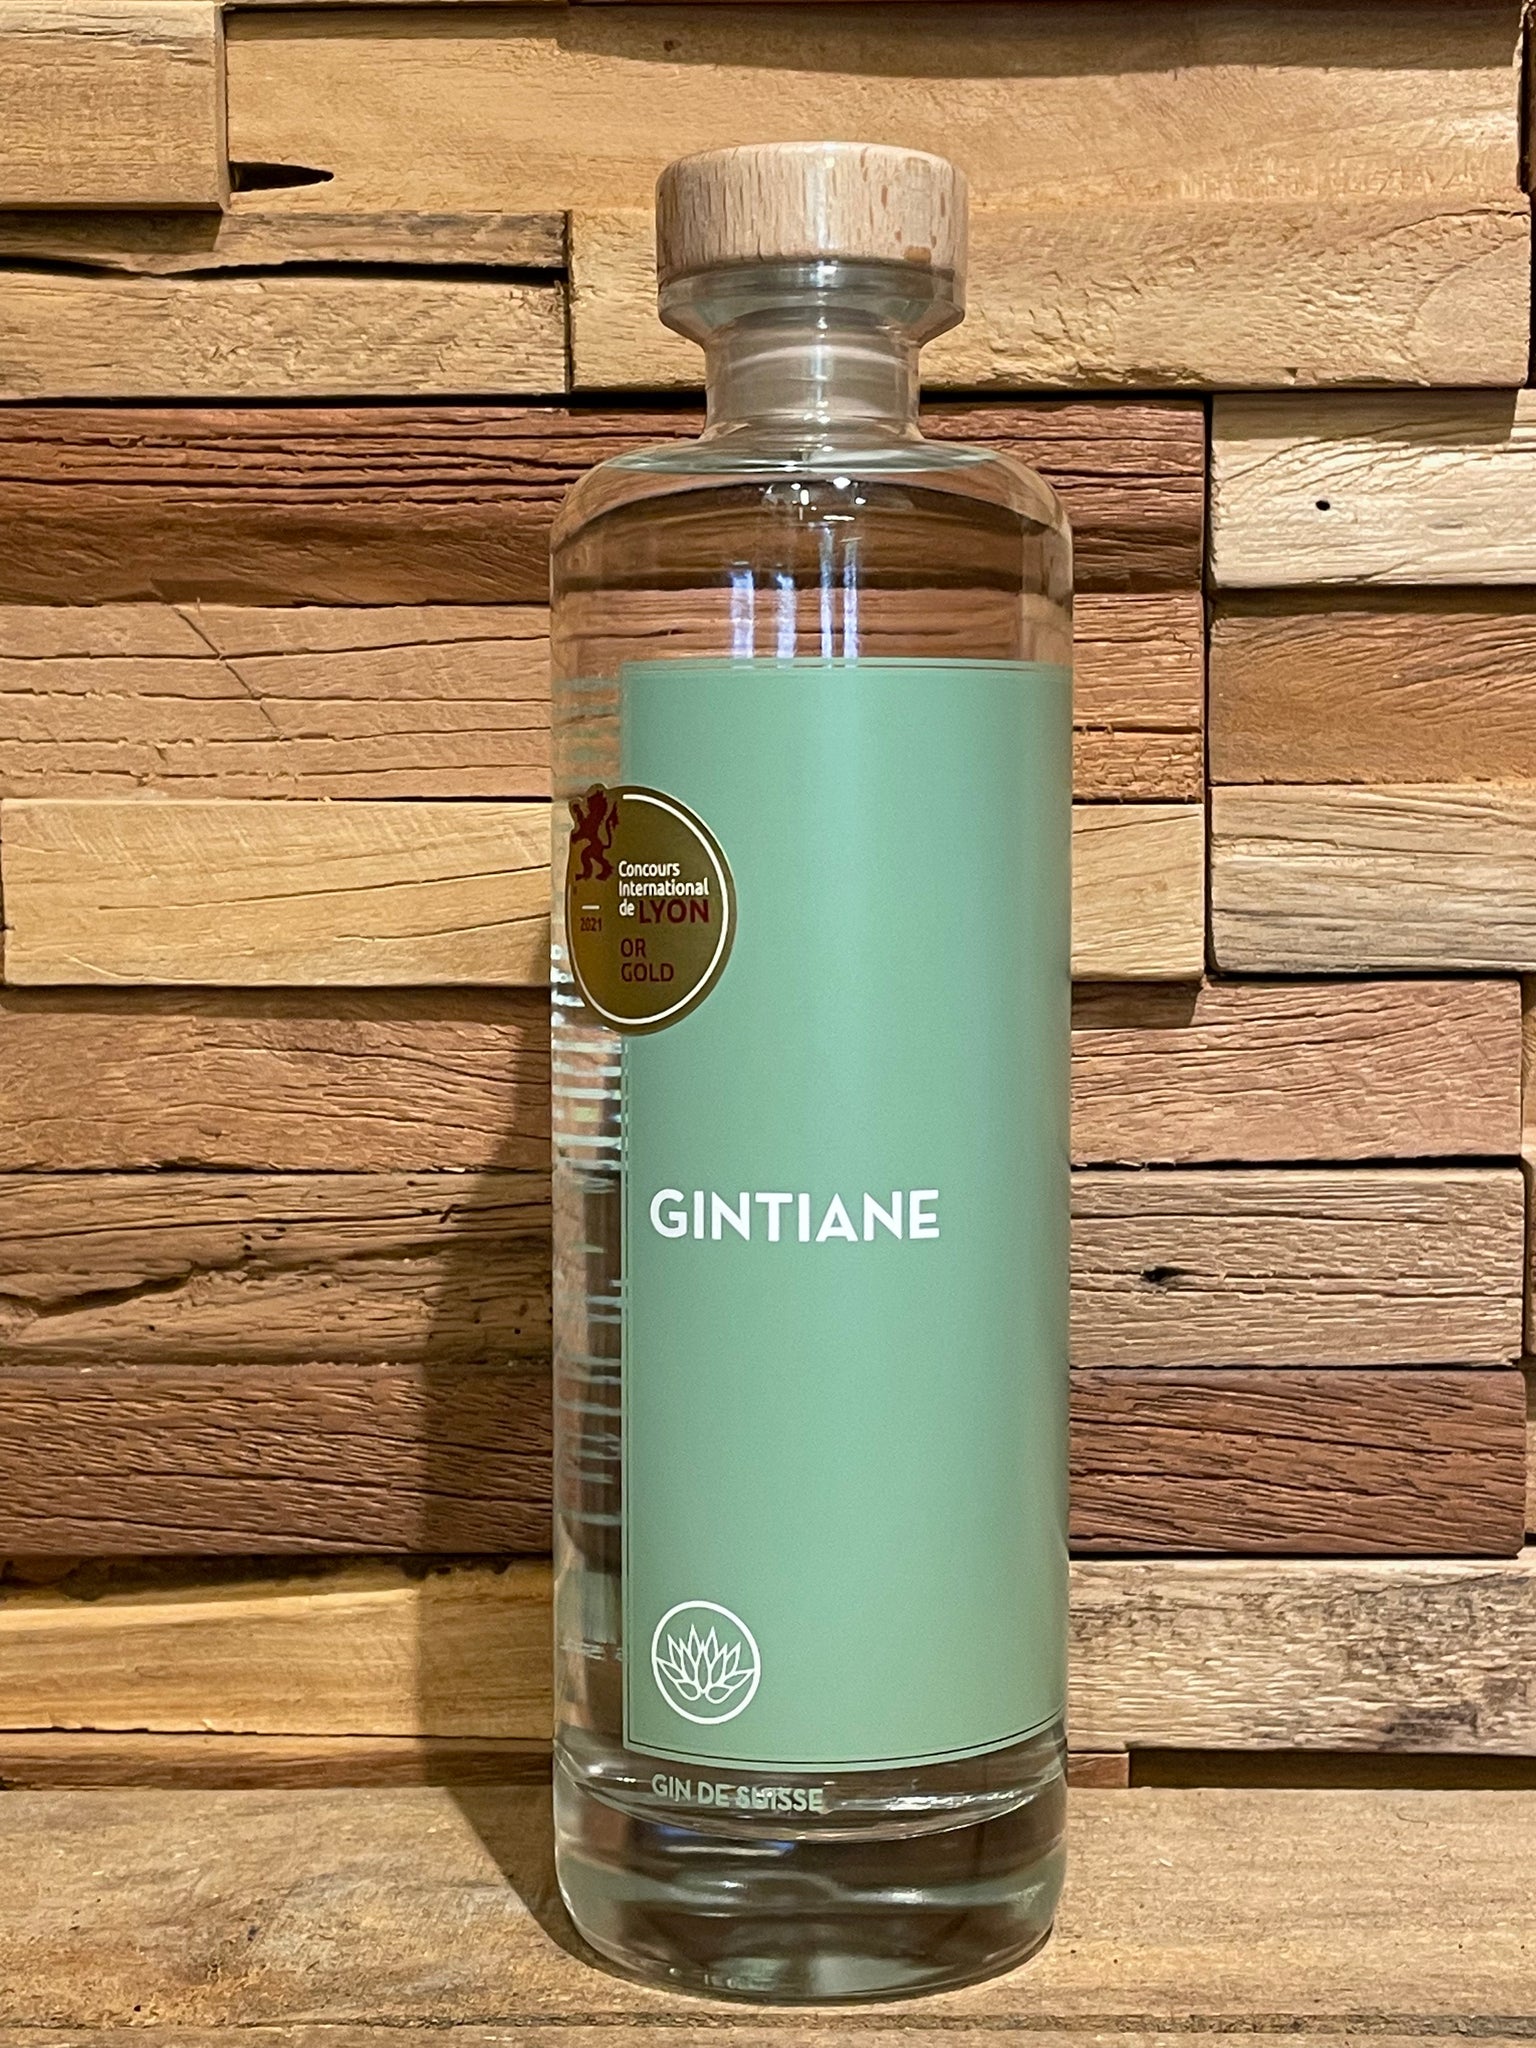 Gin Larusée -Gintiane